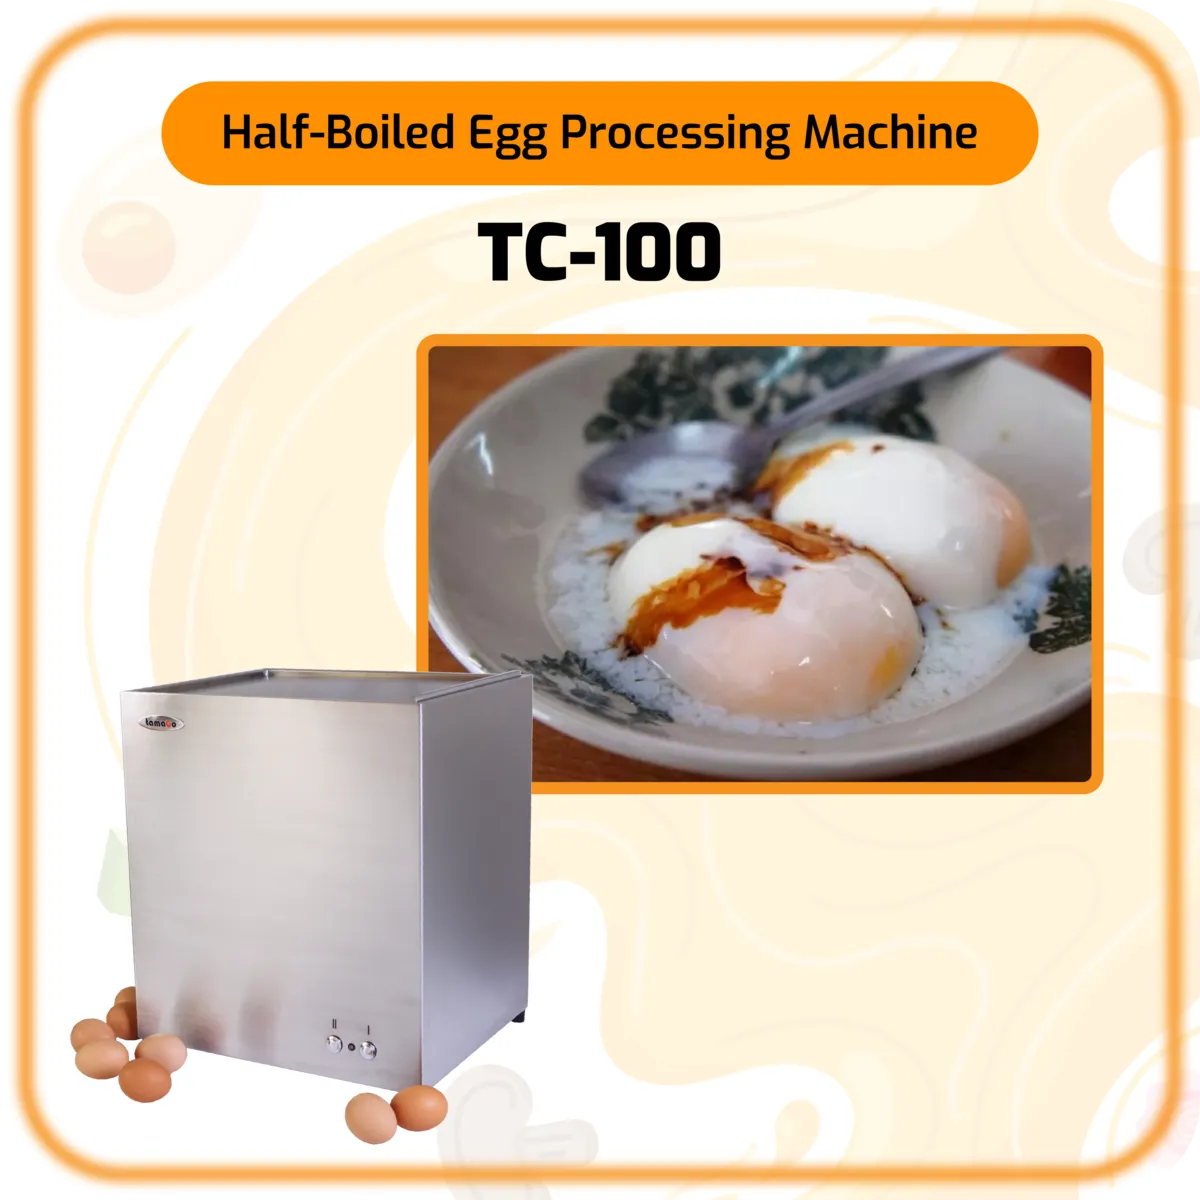 Half-Boiled Egg Processing Machine (TC-100)